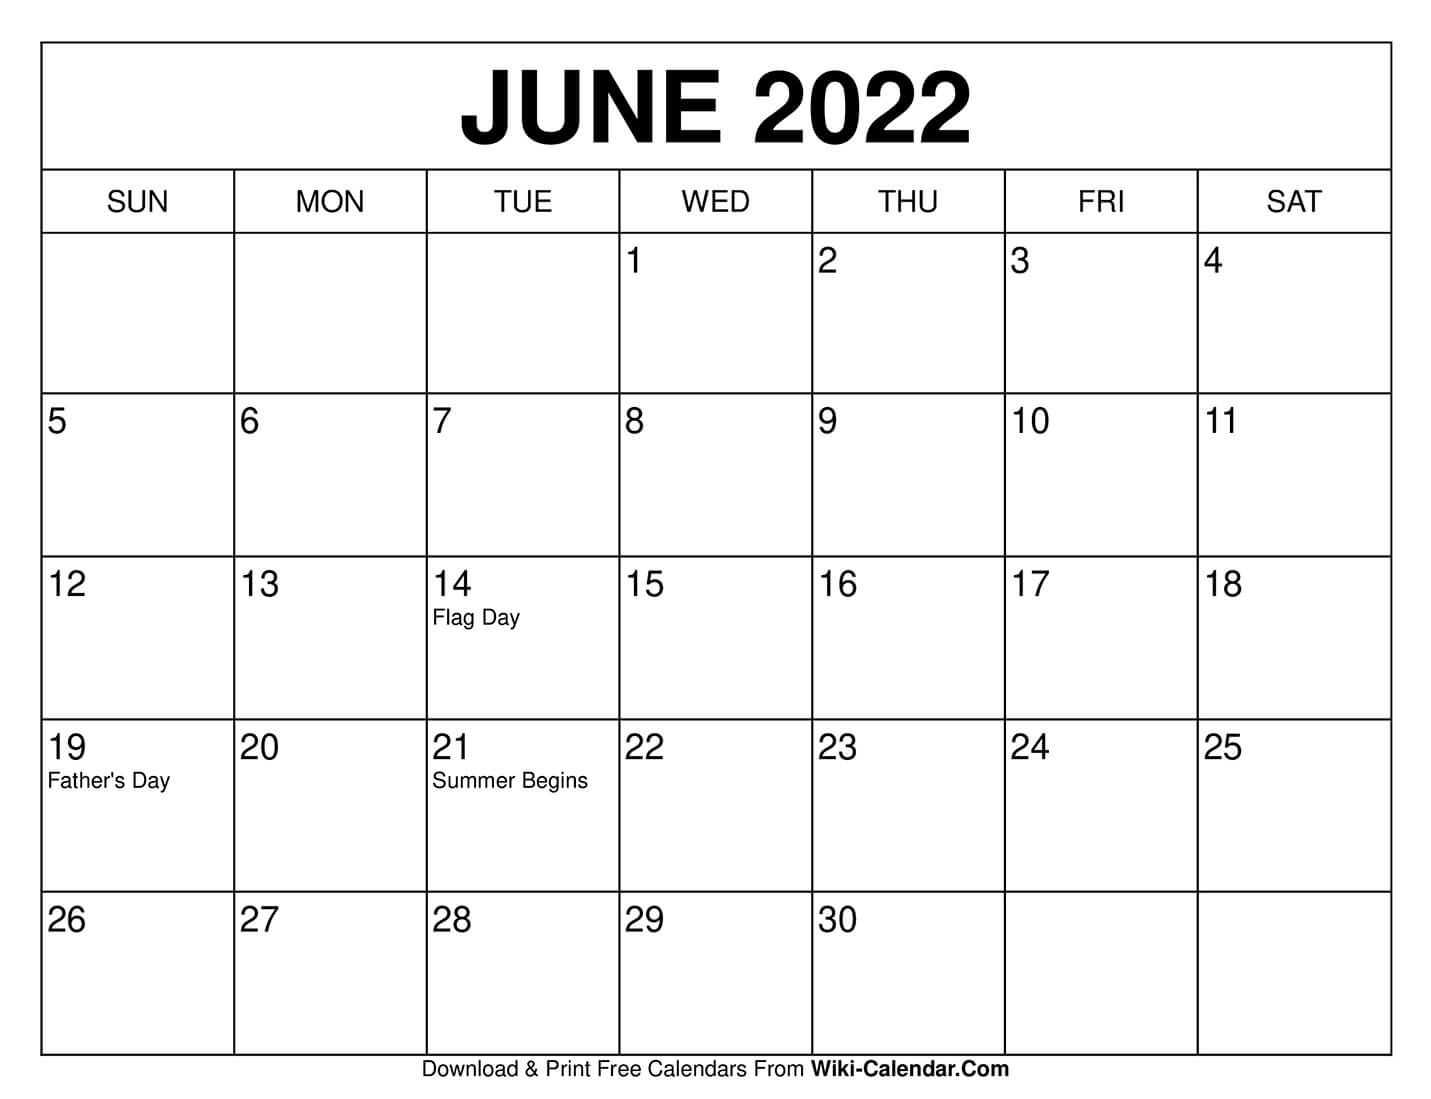 Free download June 2022 Calendar Calendar printables calendars to print [1431x1099] for your Desktop, Mobile & Tablet